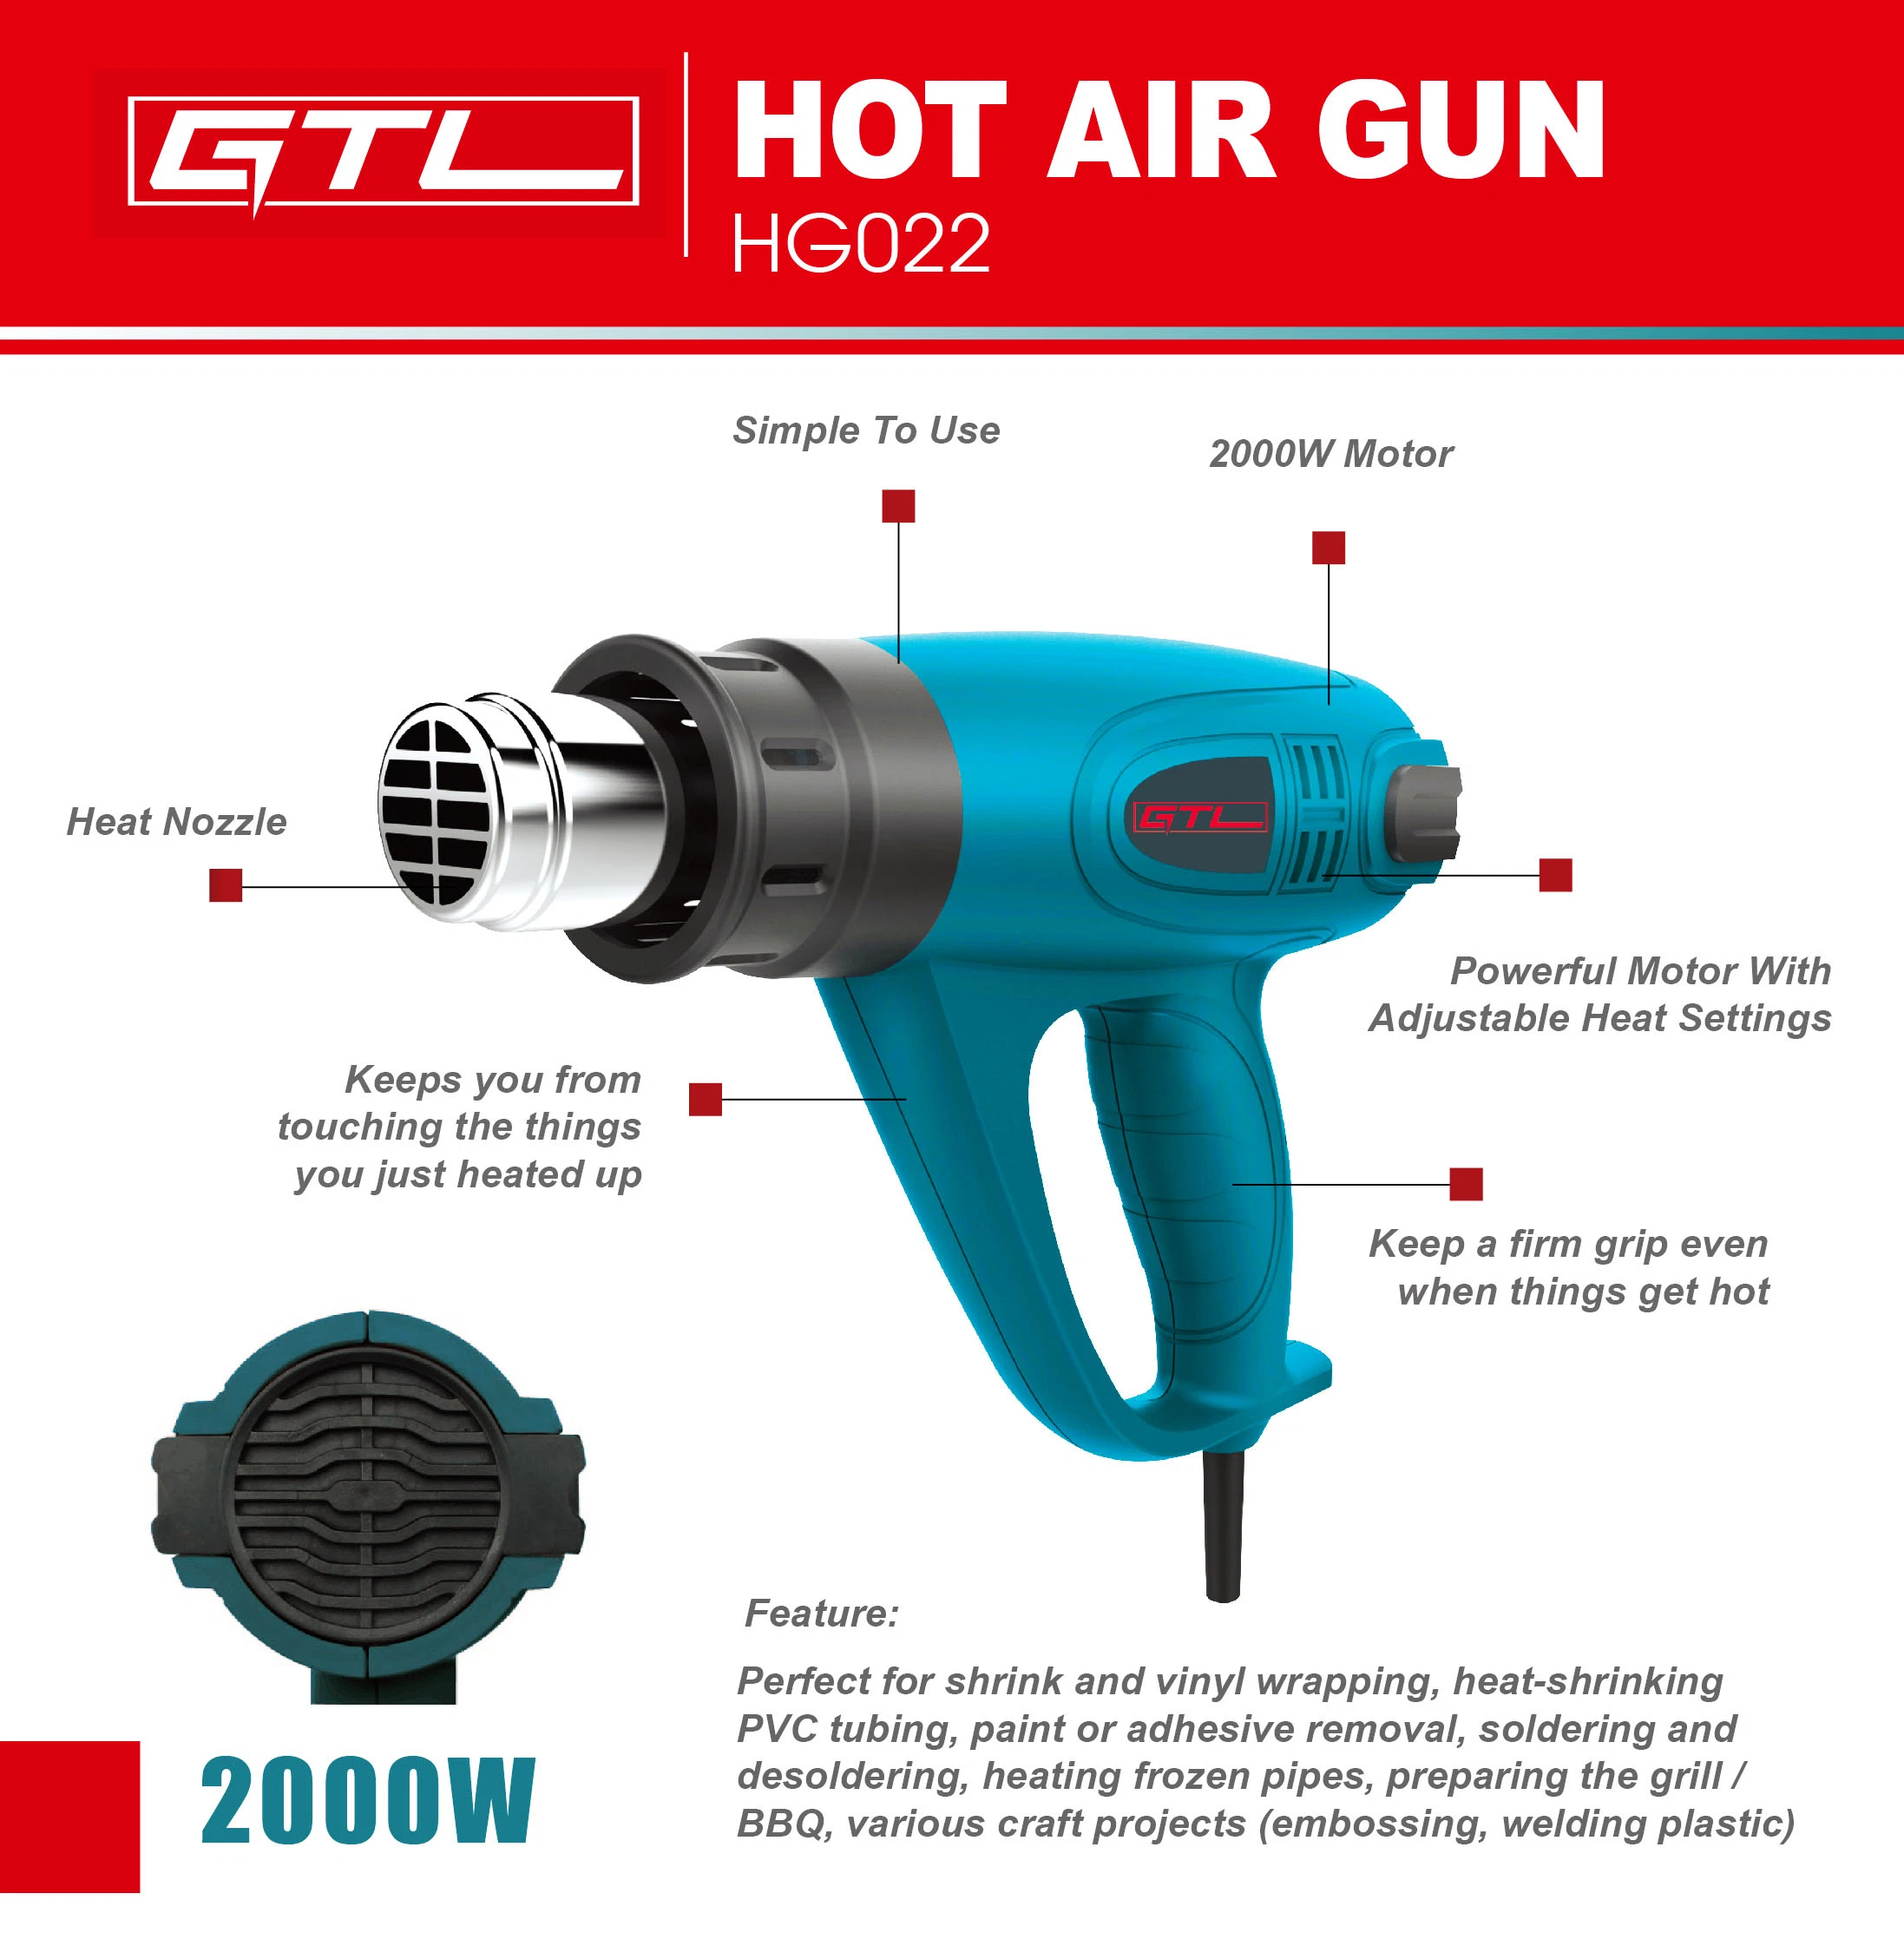 Power Tools Portable Electric Tool Hot Air Gun 2000W, Hot Air Gun, Power Tool of Hot Air Gun (HG022)